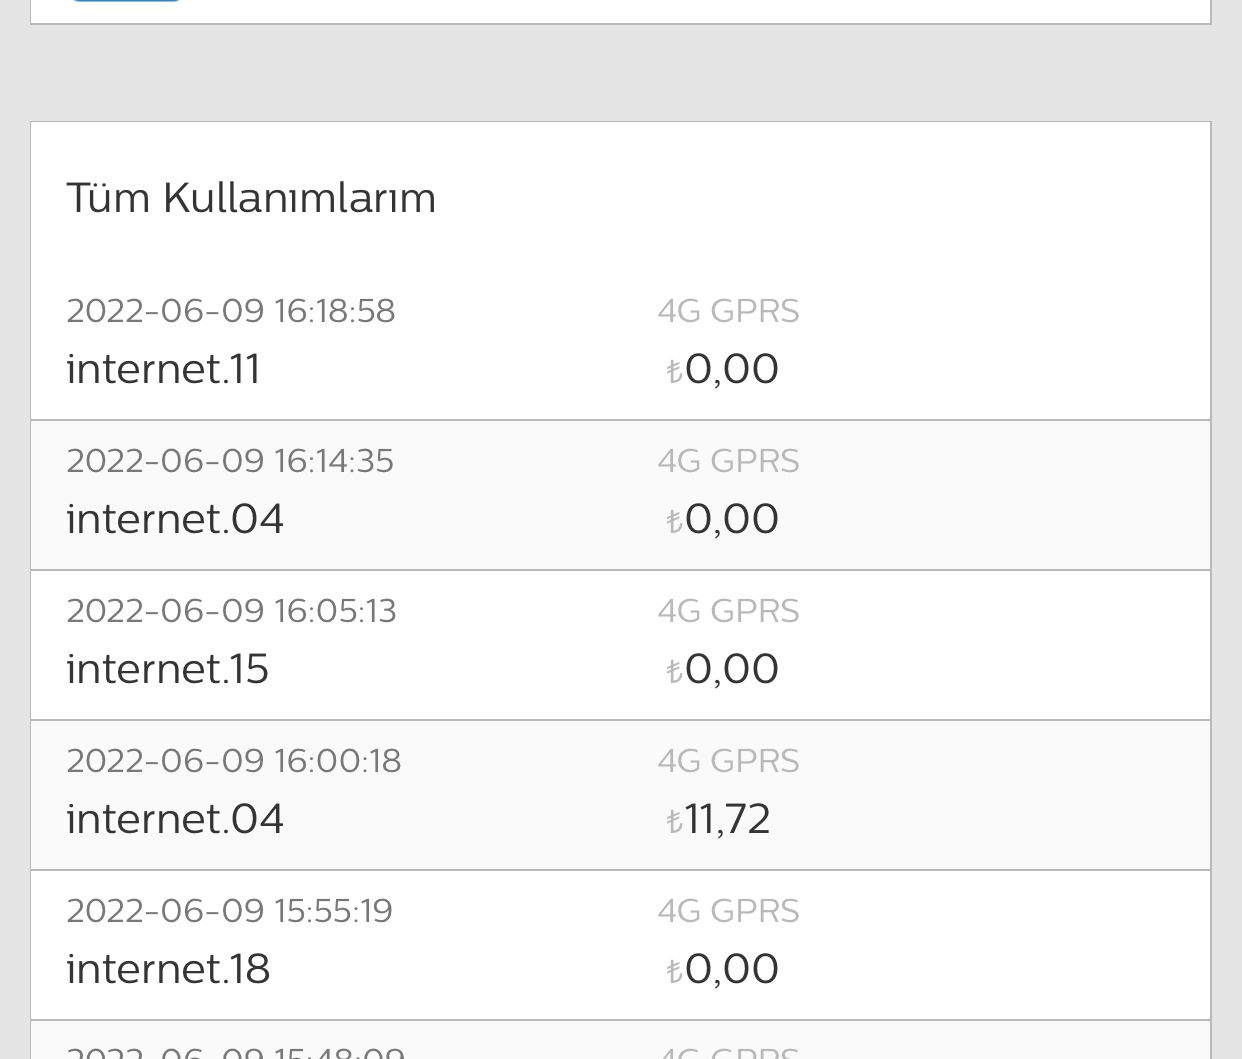 Türk Telekom 11,72 TL internet ücreti kesmiş | Technopat Sosyal